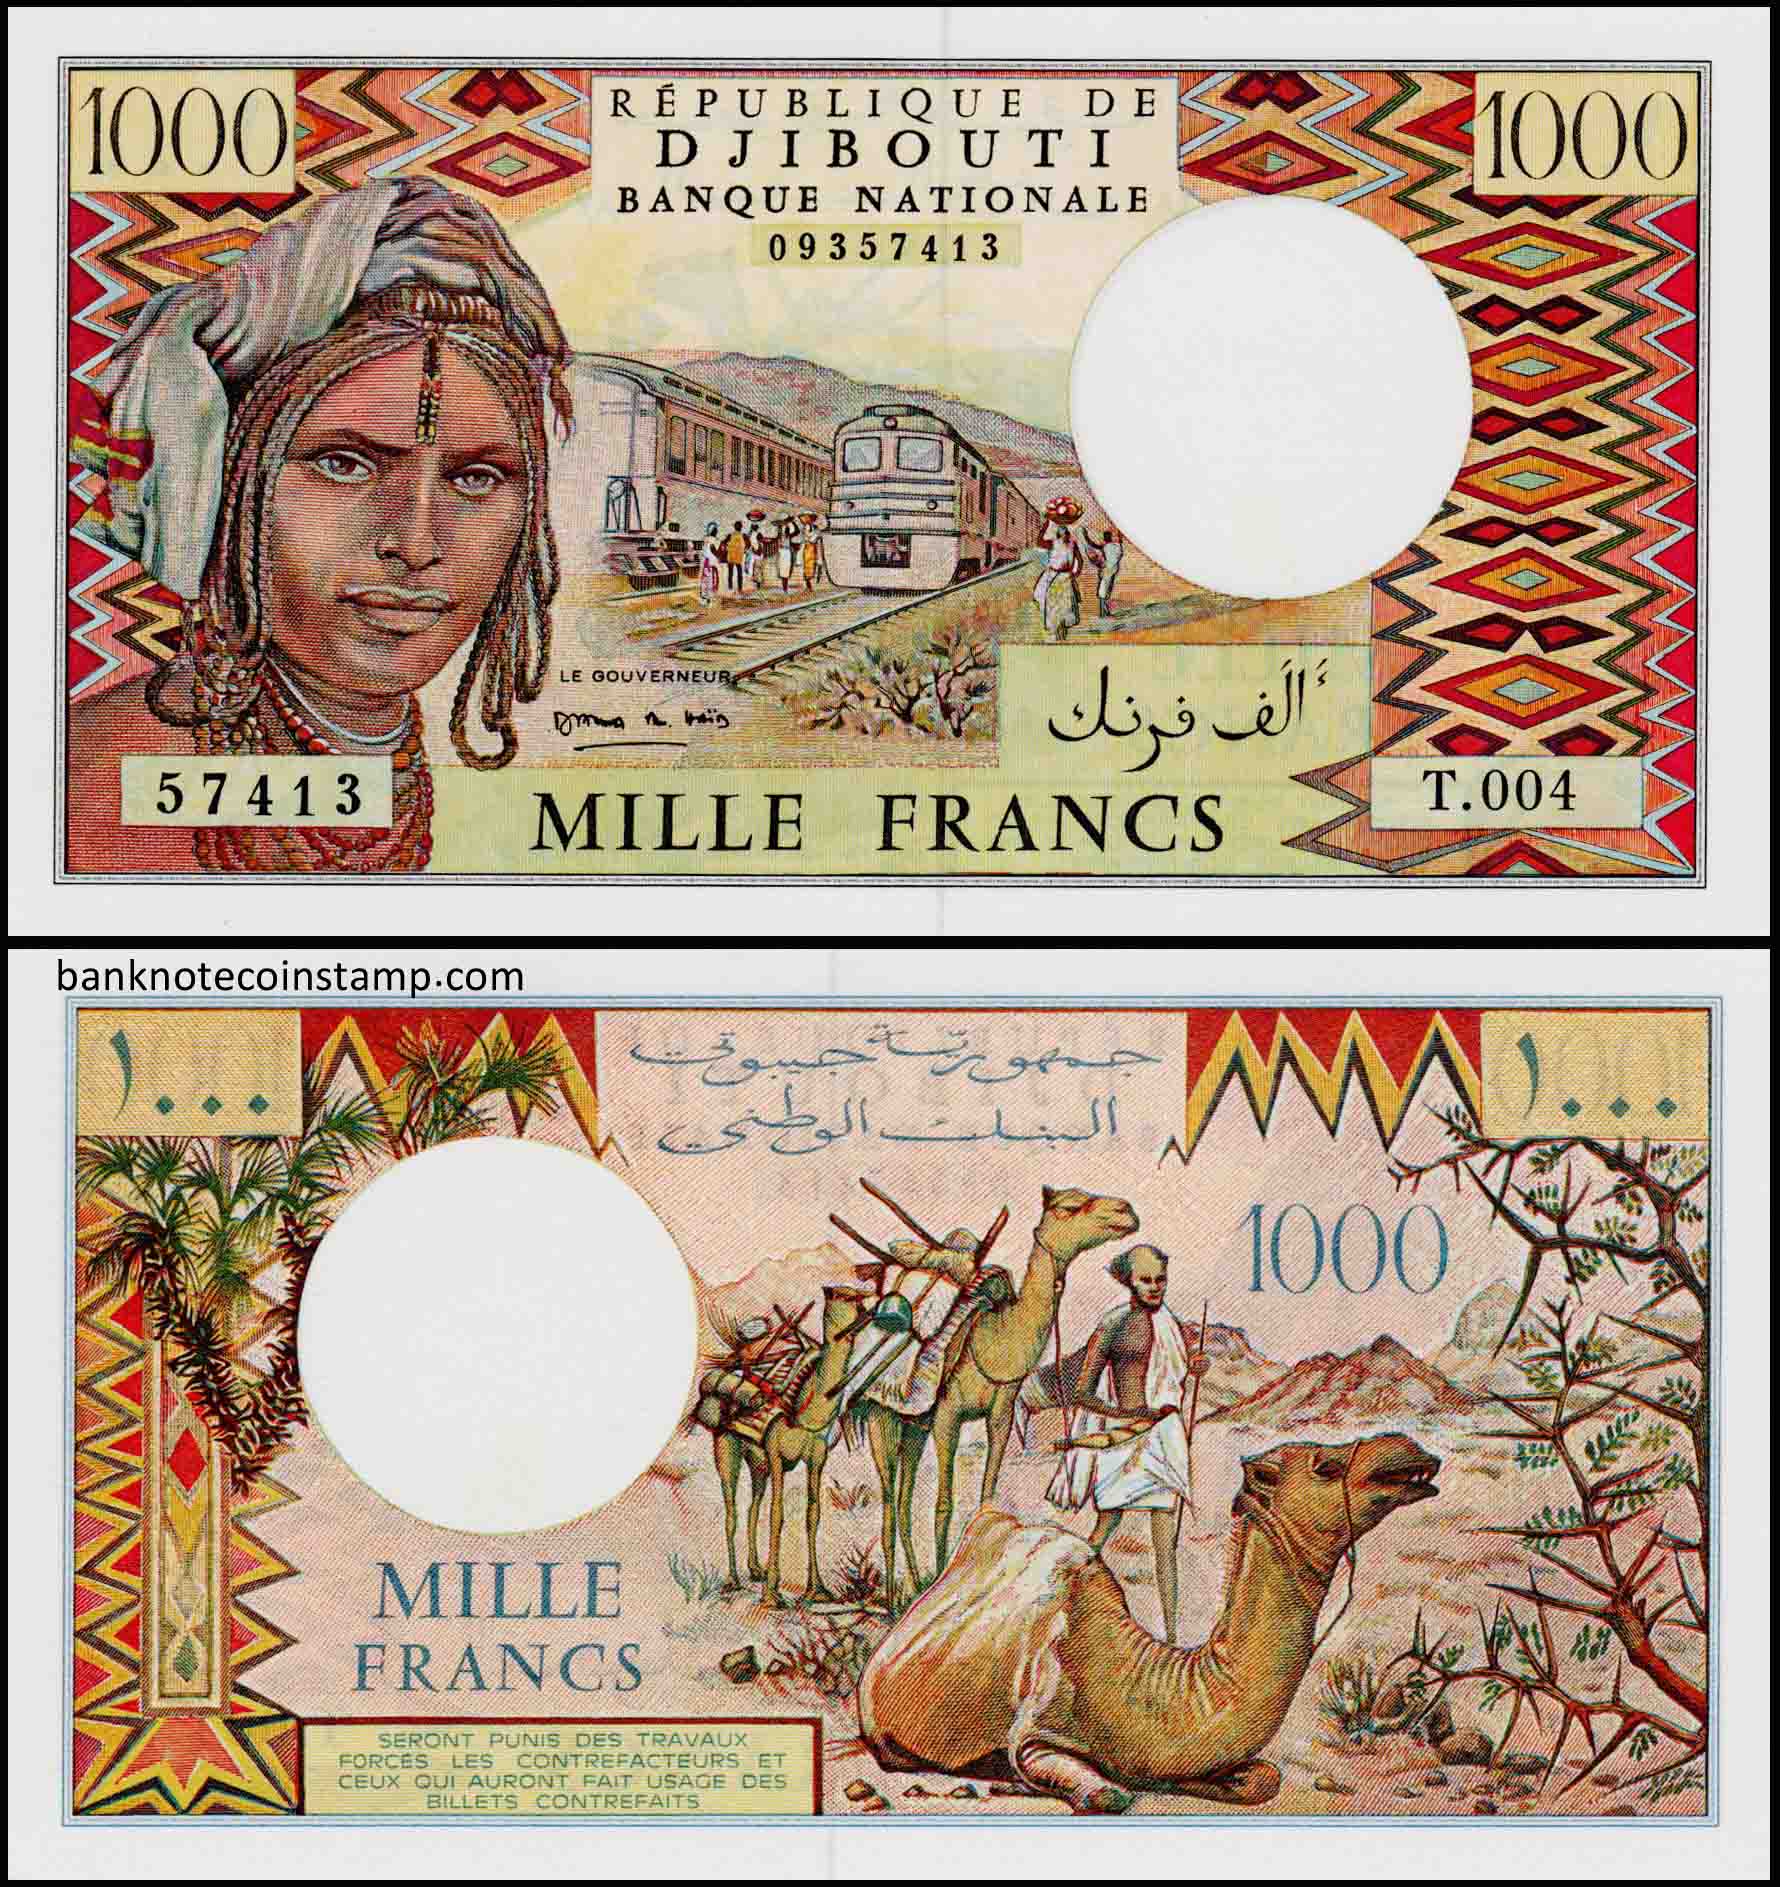 Djibouti 1000 Francs Very Fine Banknote – Banknotecoinstamp